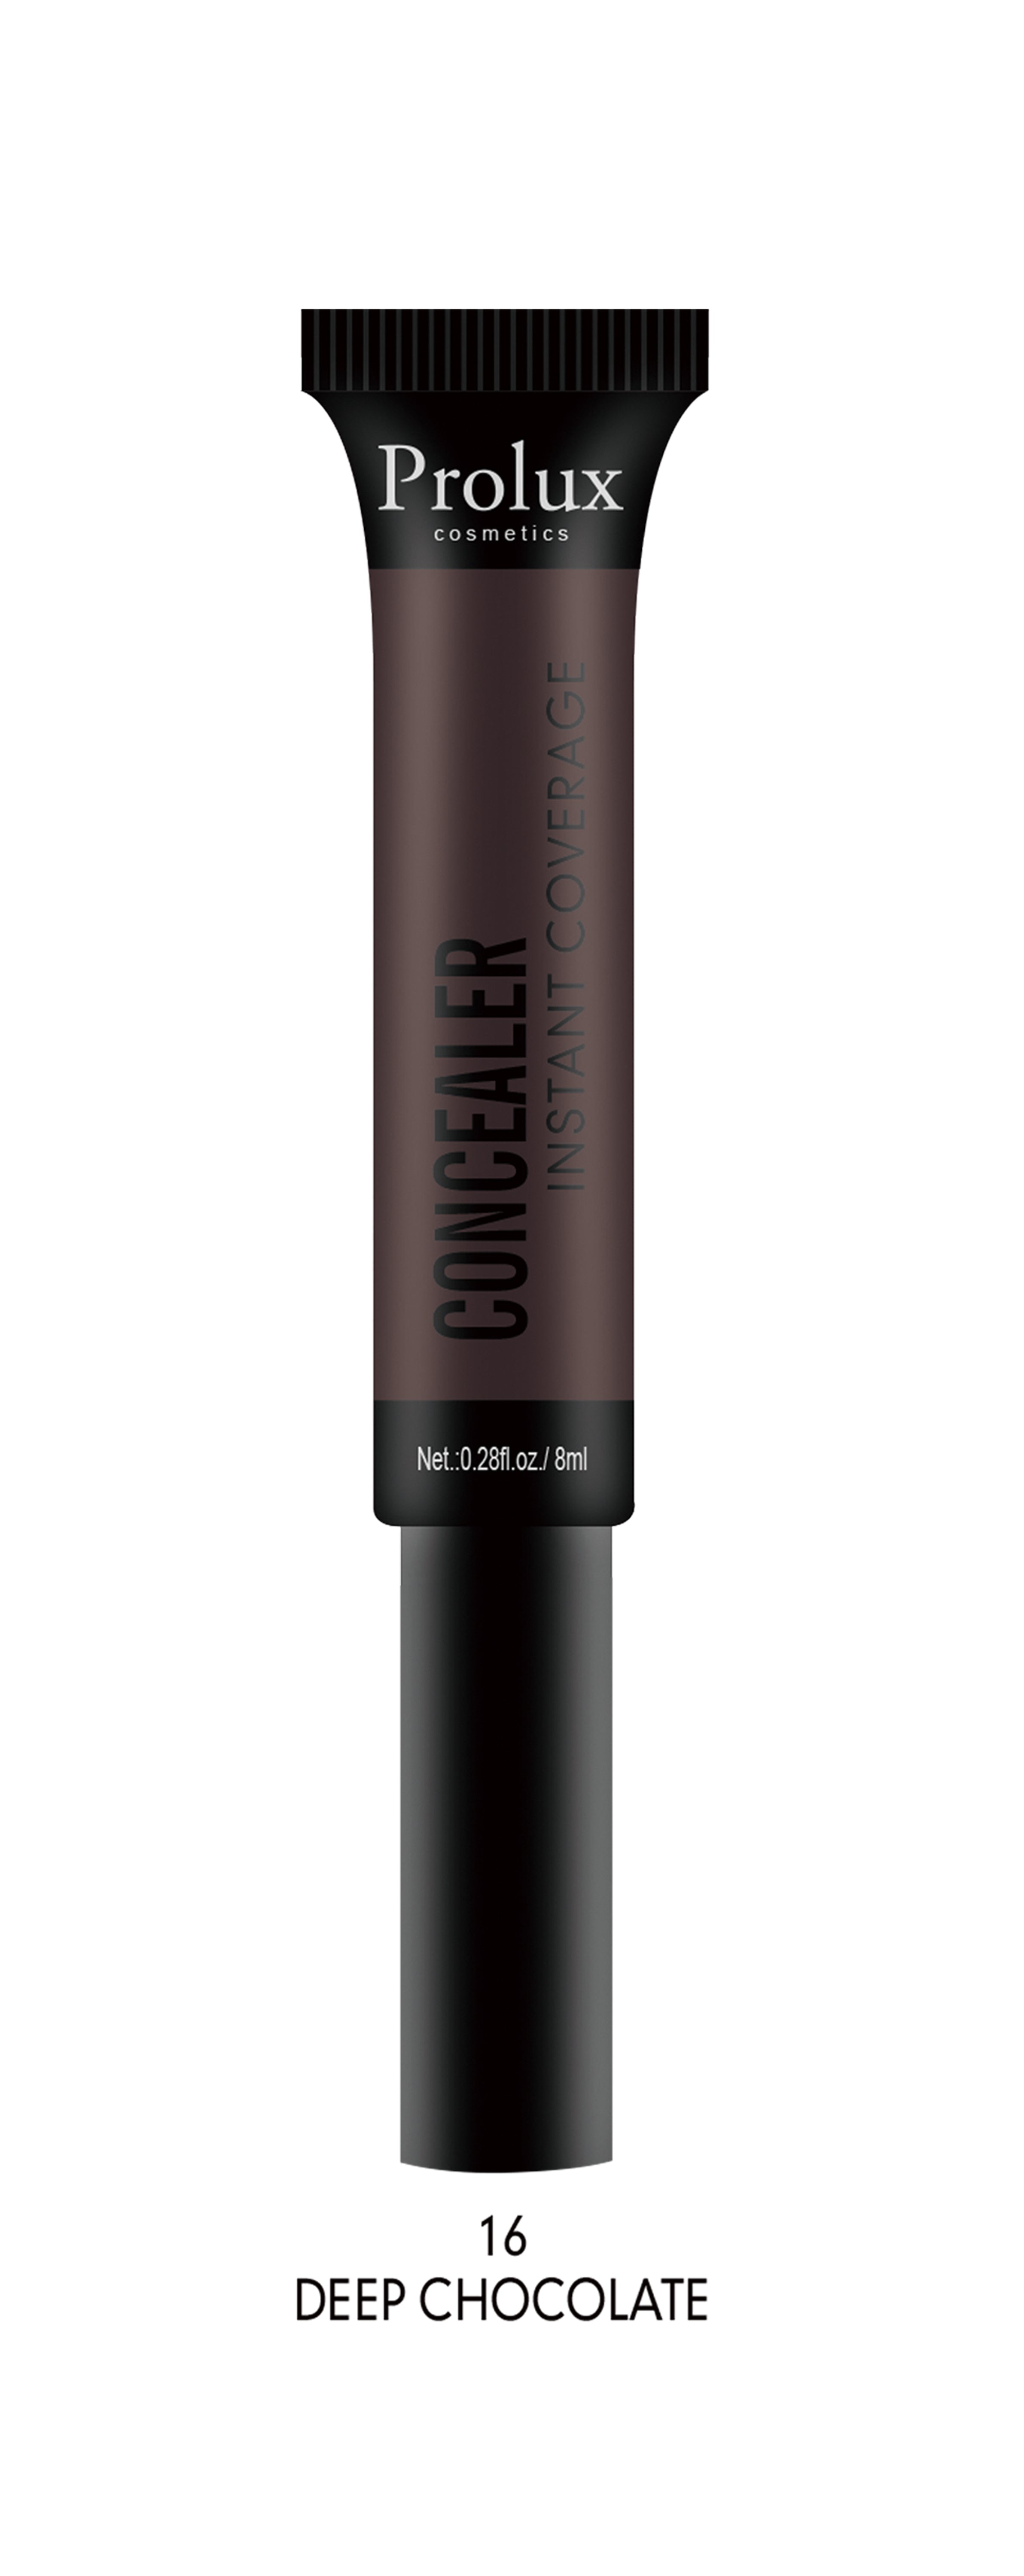 Items under 5 Dollars Makeup Dark Circle Covering Multipurpose Concealer Pen